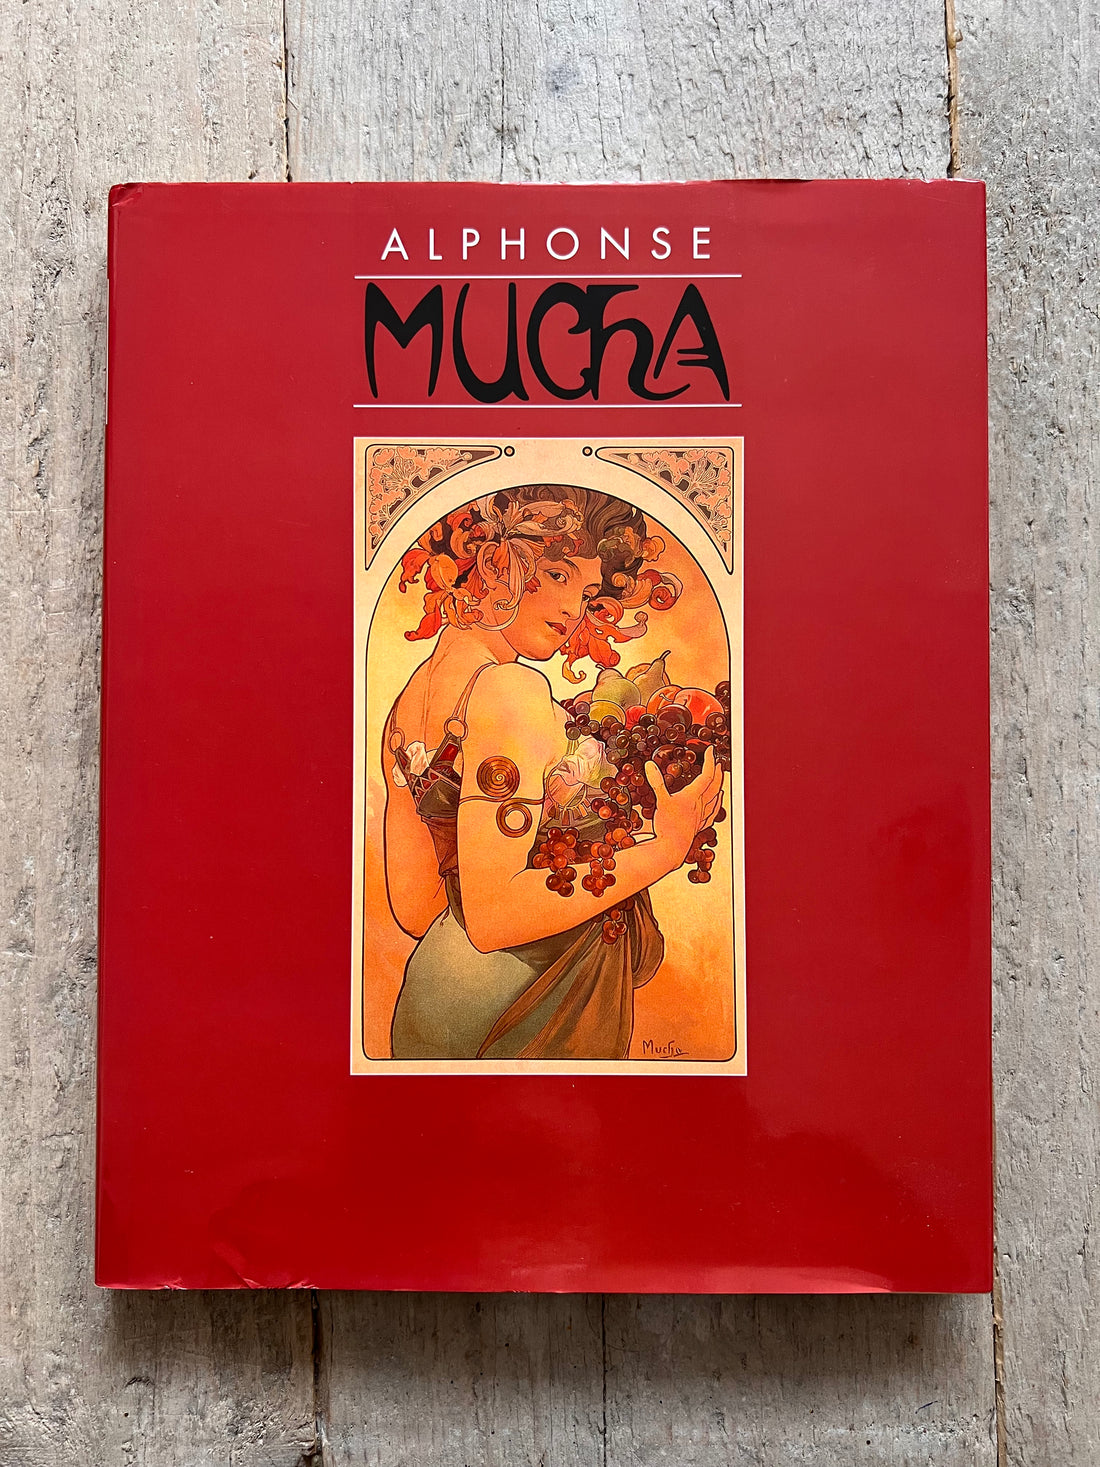 Boek Alphonse Mucha